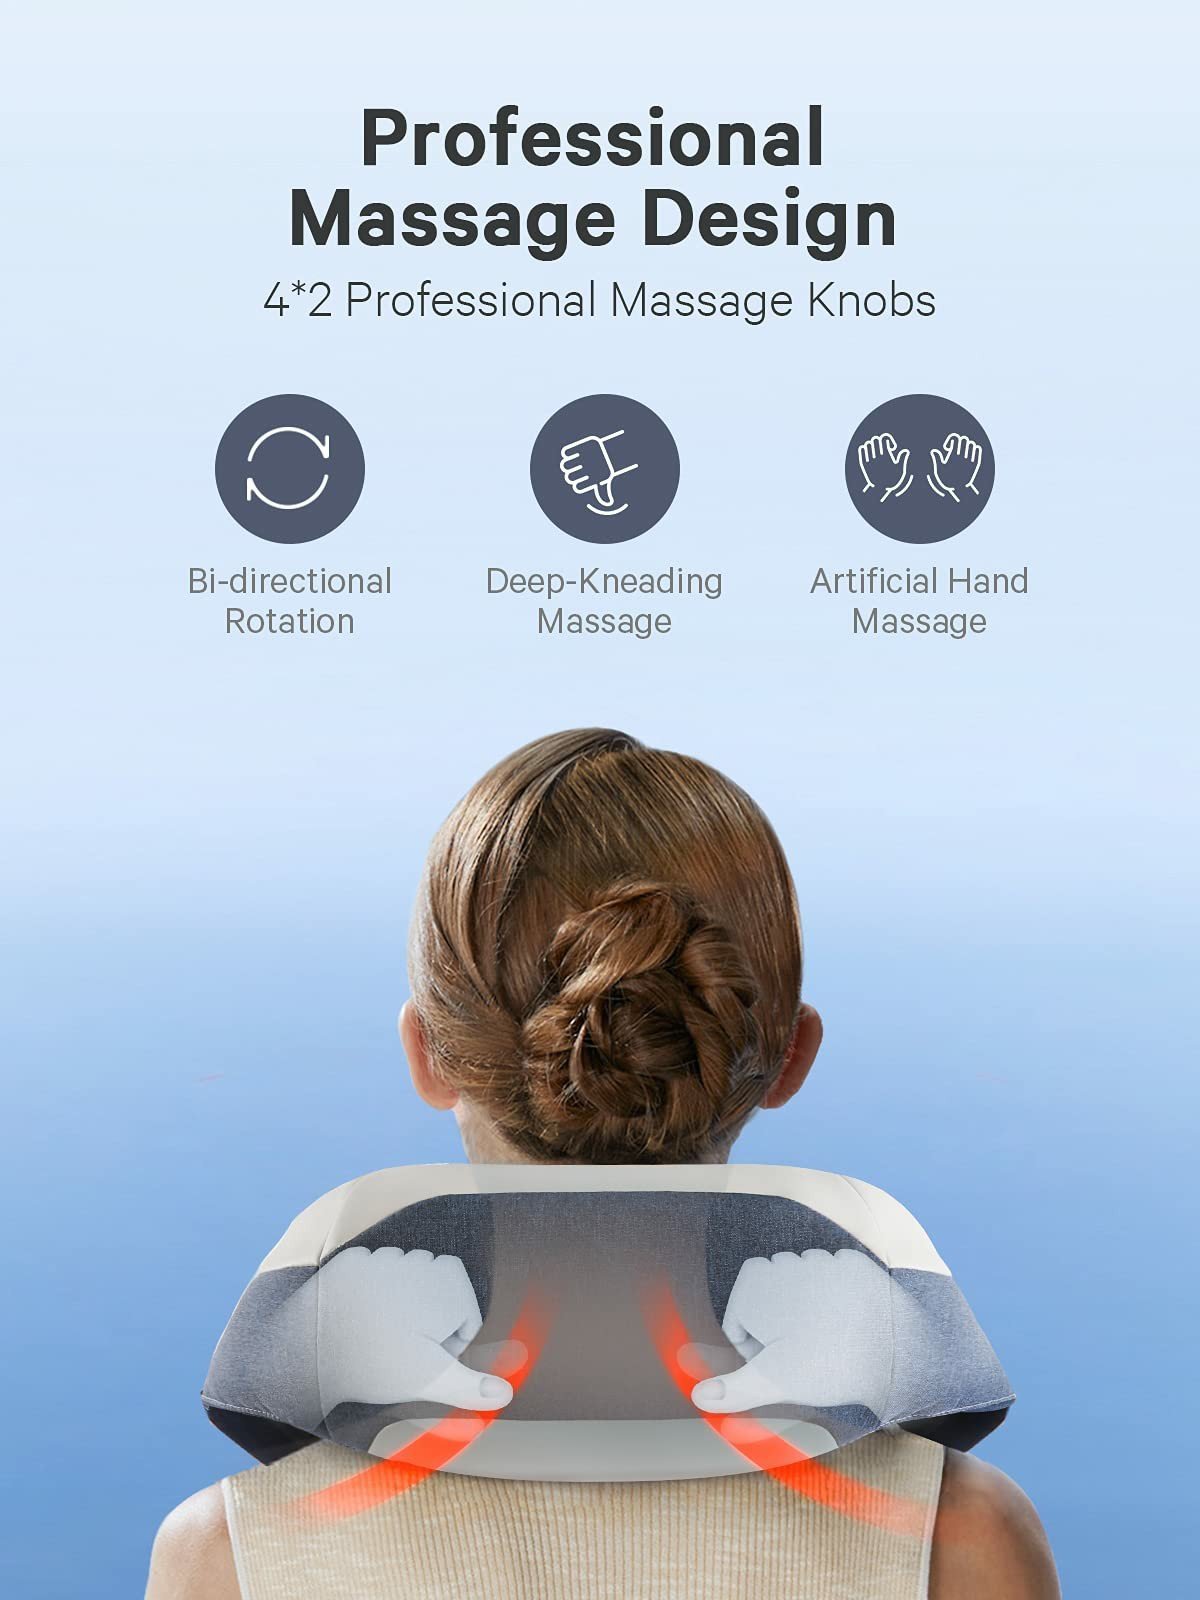 Naipo Cordless Rechargeable Back Massager Shiatsu Neck Shoulder Massag –  MAXKARE